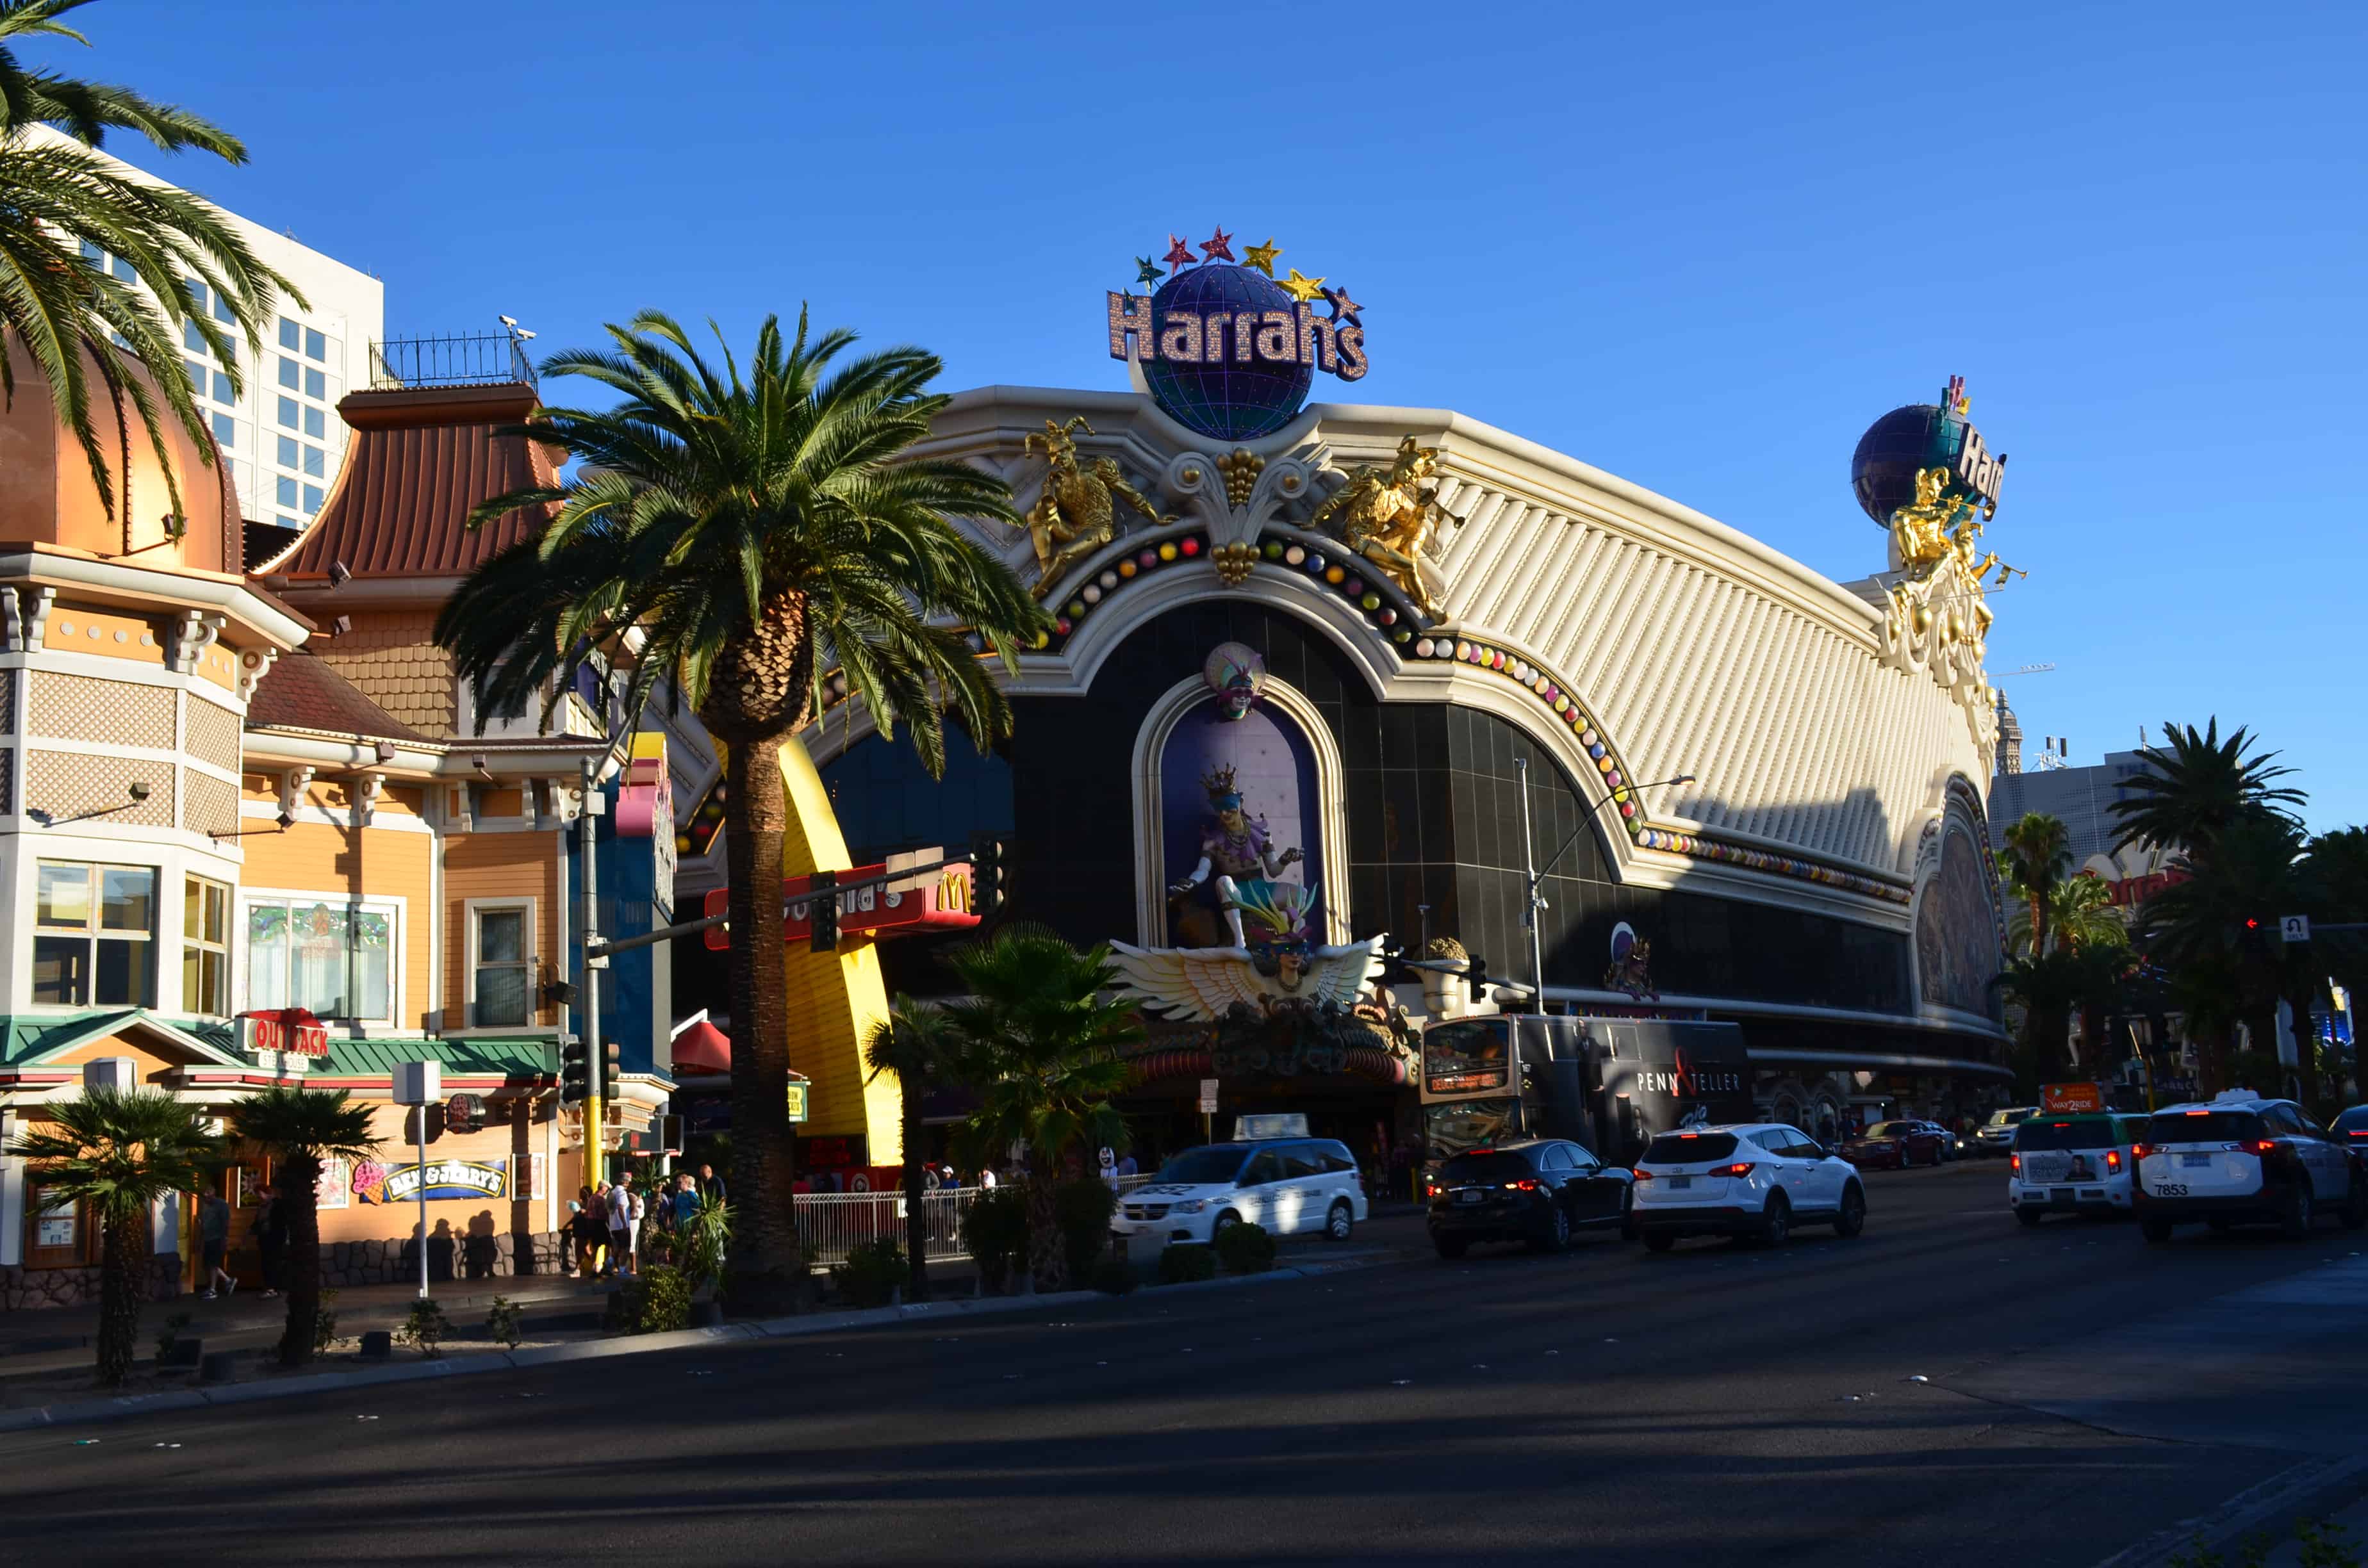 Harrah's in Las Vegas, Nevada